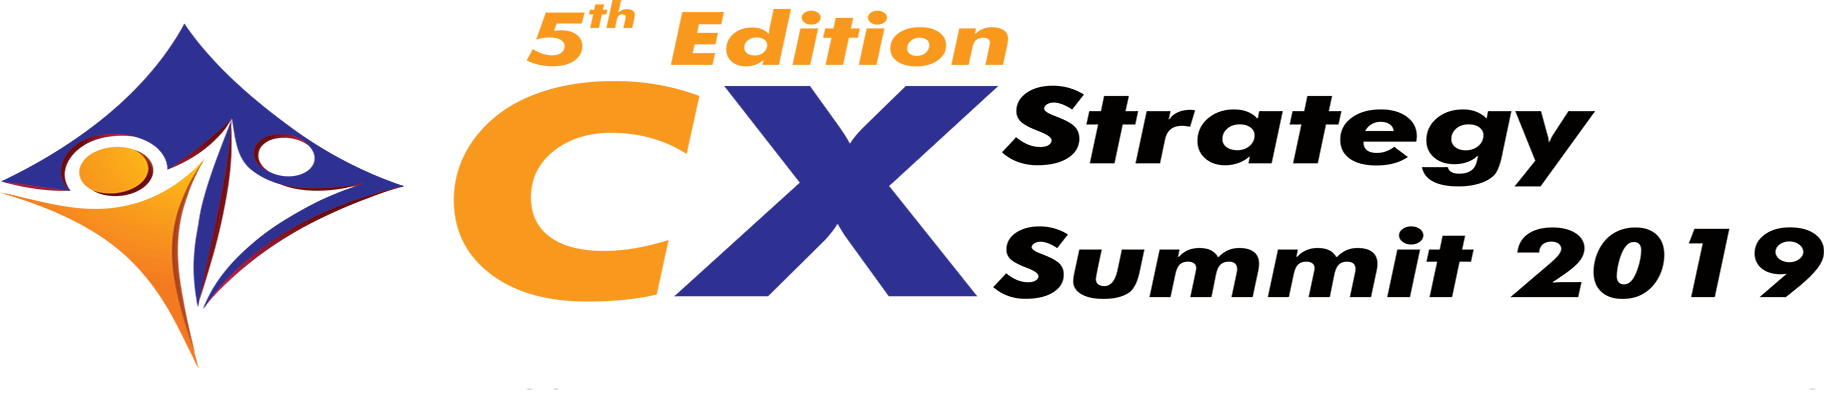 5th edition CX Strategy  Summit 2019